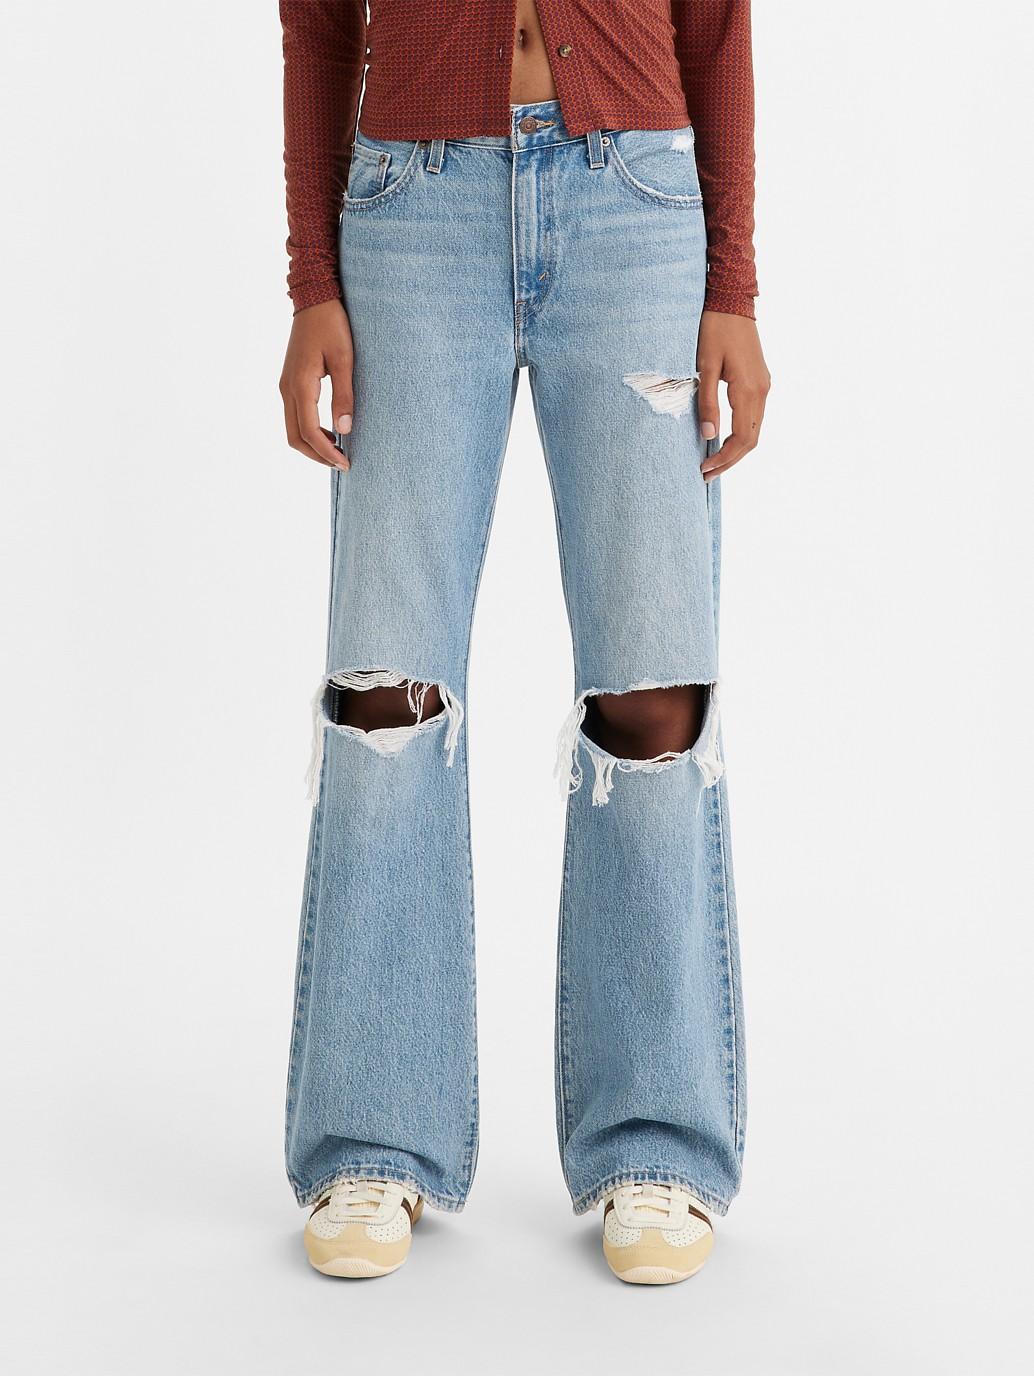 Buy Levi's® Women's Baggy Bootcut Jeans | Levi's® Official Online Store SG